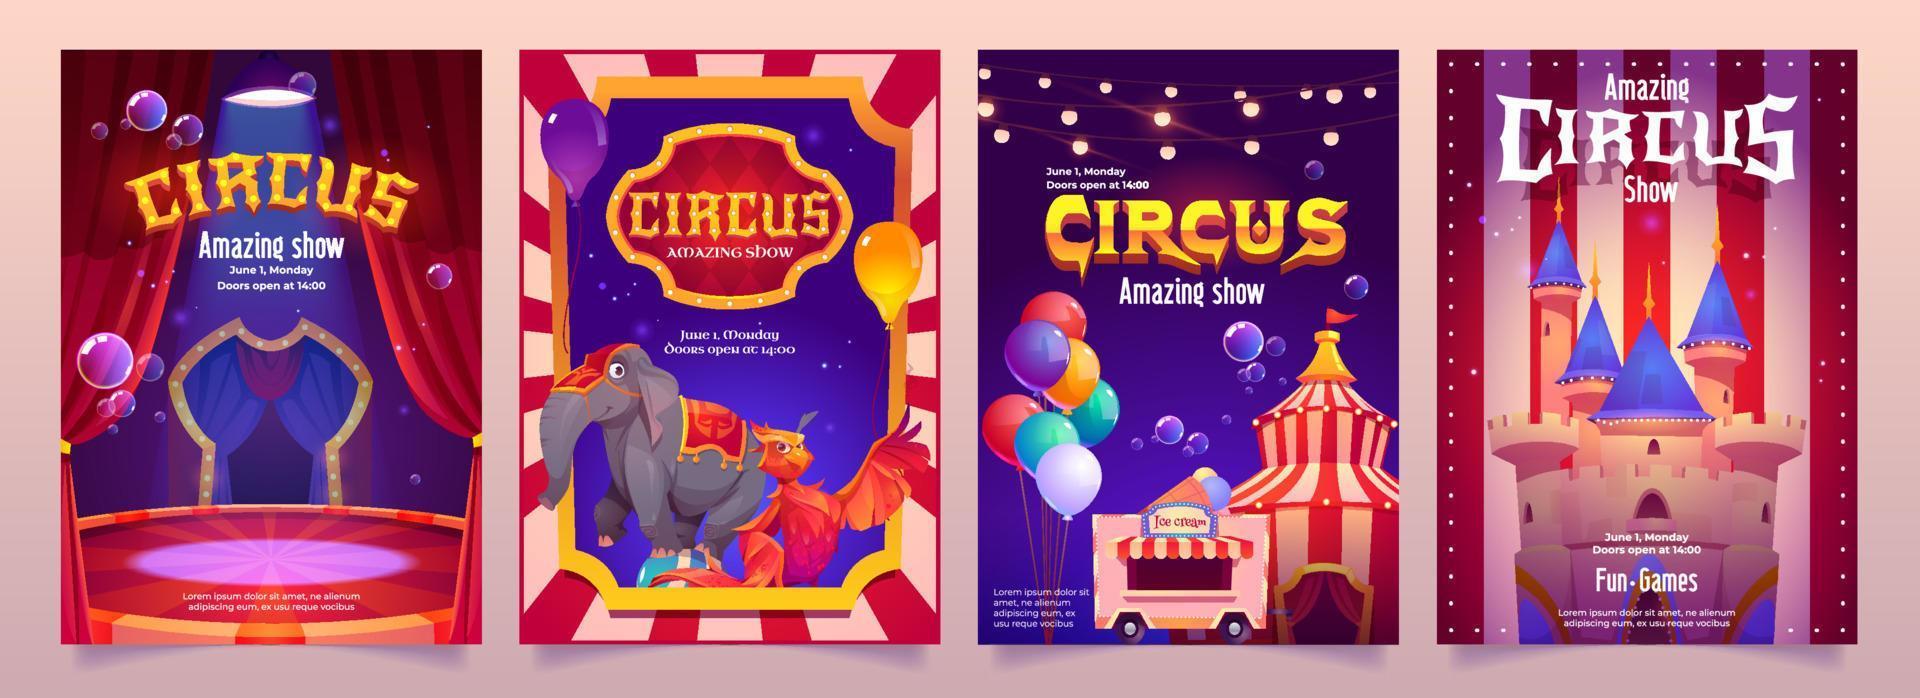 carnaval kermis flyers met circus tent vector